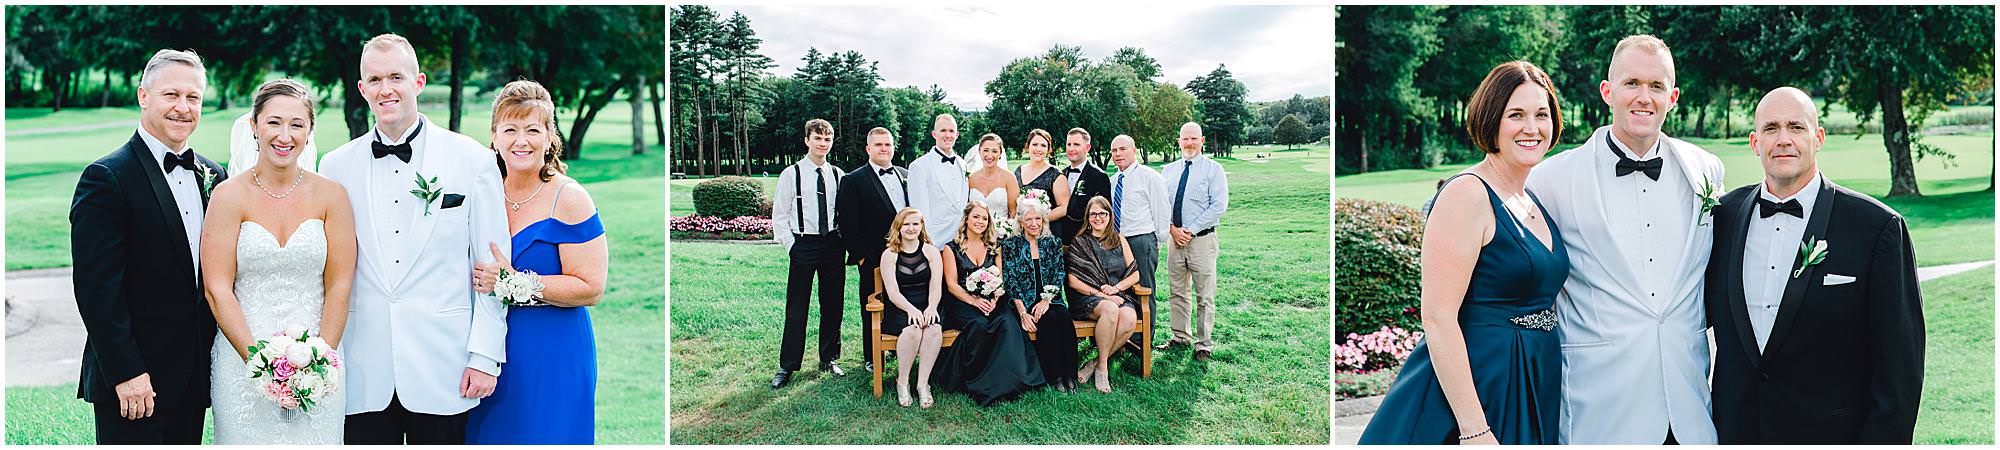 wedding family portrait list